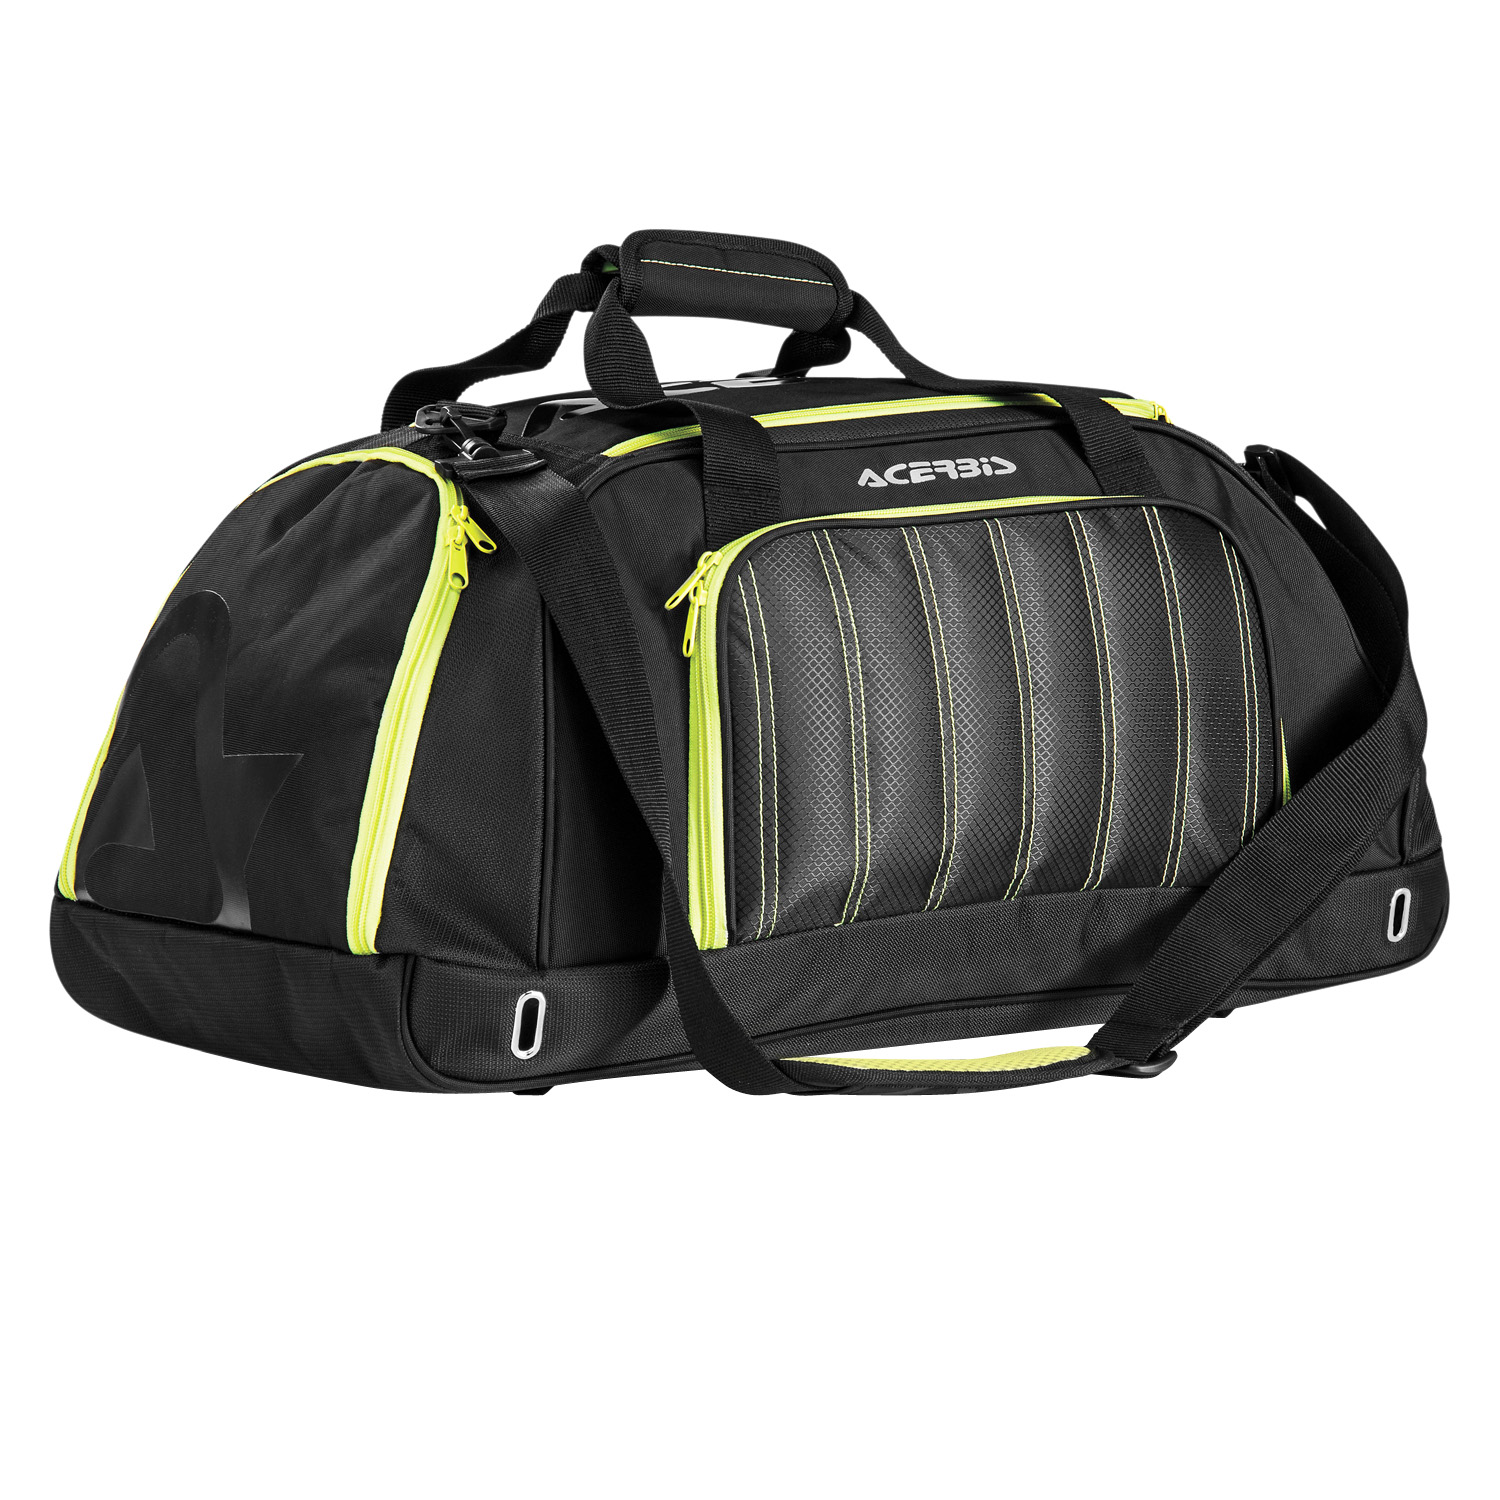 Acerbis Sports and Travel Bag Profile Bag 50 Liter - Black/Yellow